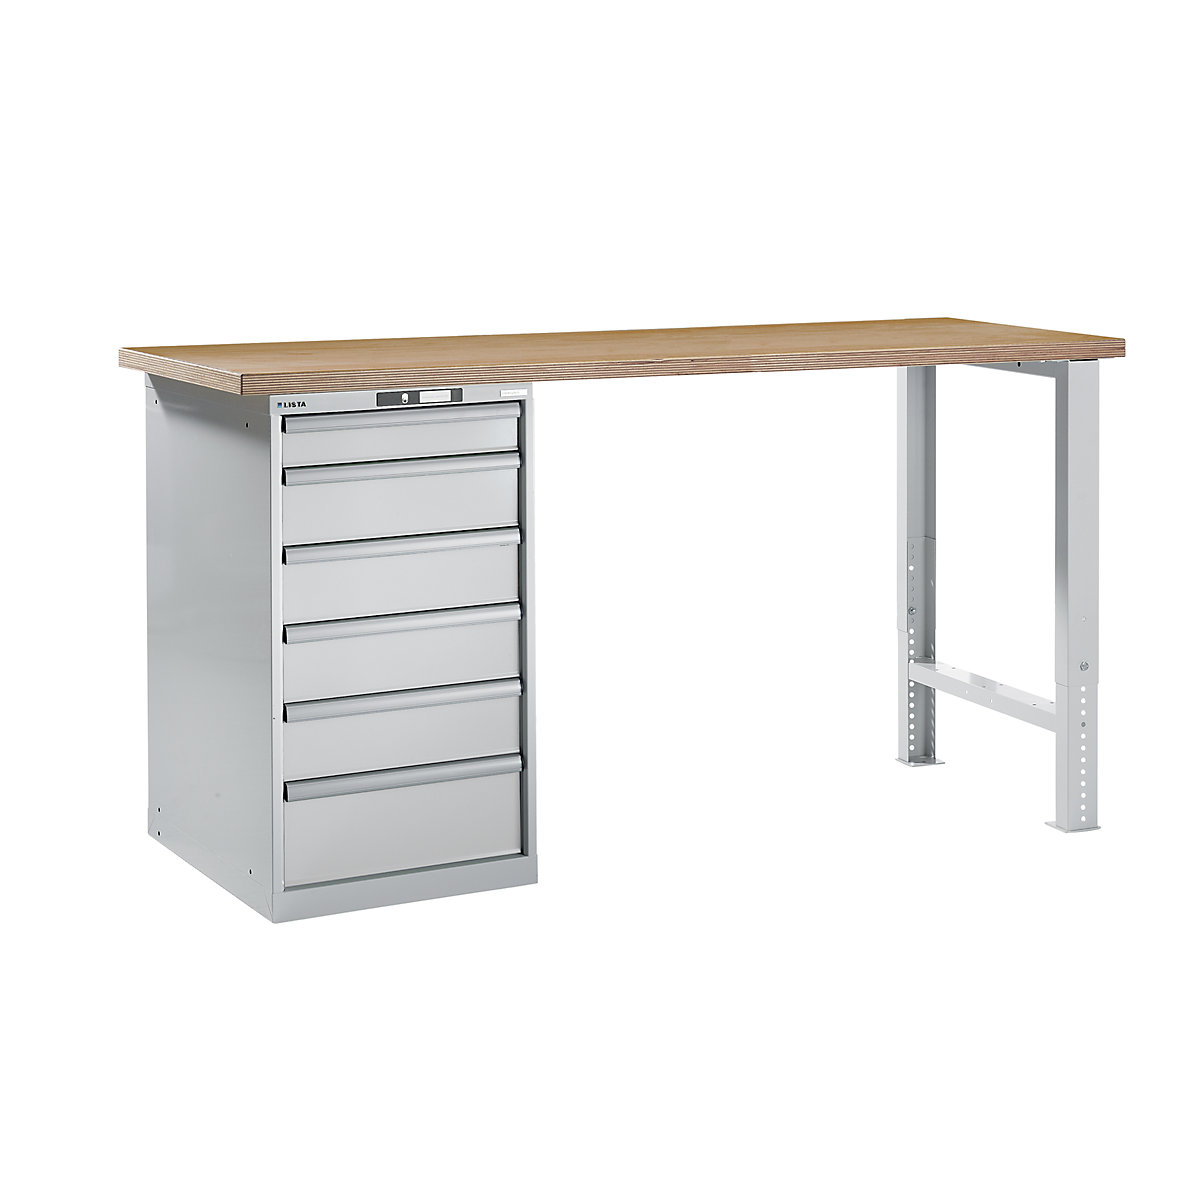 Modular workbench – LISTA, height 1040 mm, pedestal drawer unit, 6 drawers, light grey, table width 2000 mm-4